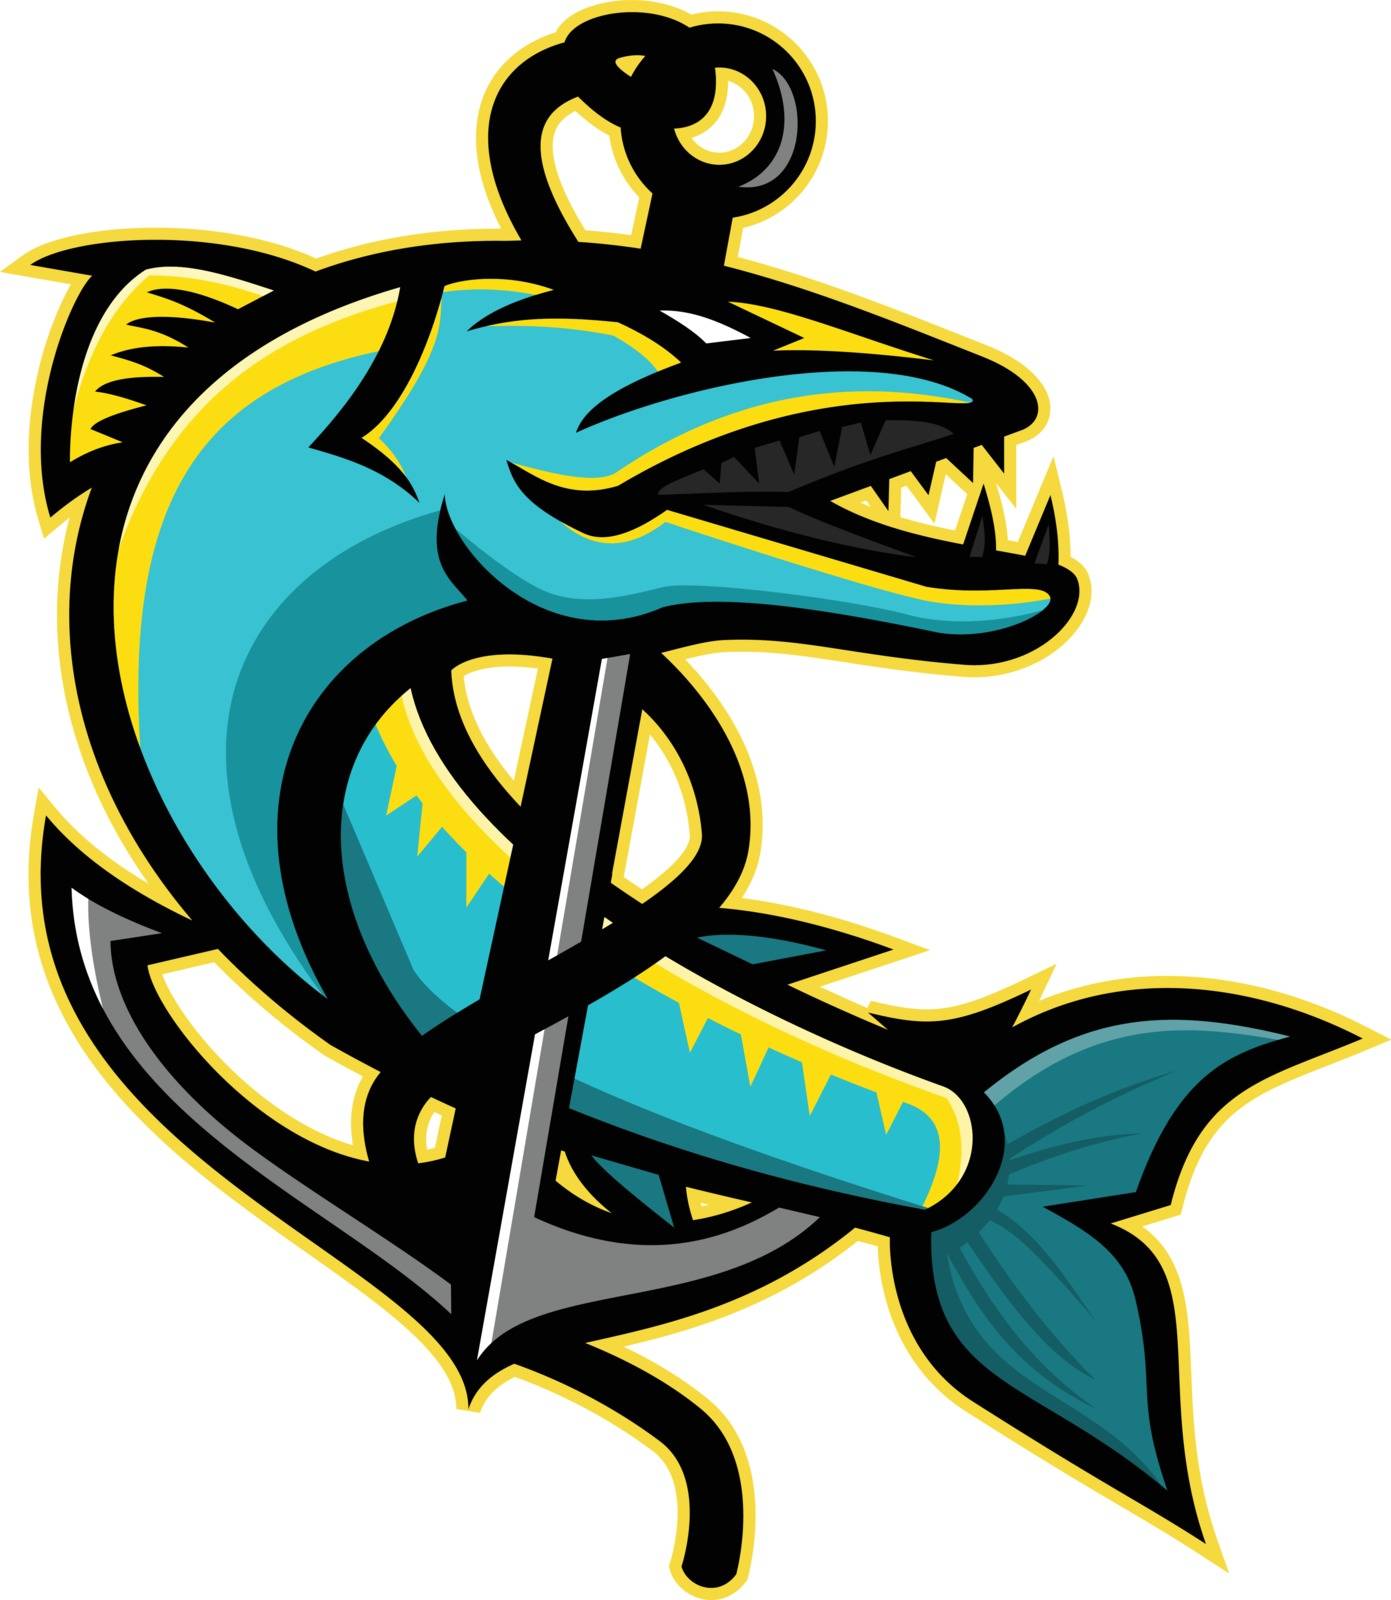 Barracuda and Anchor Mascot by patrimonio